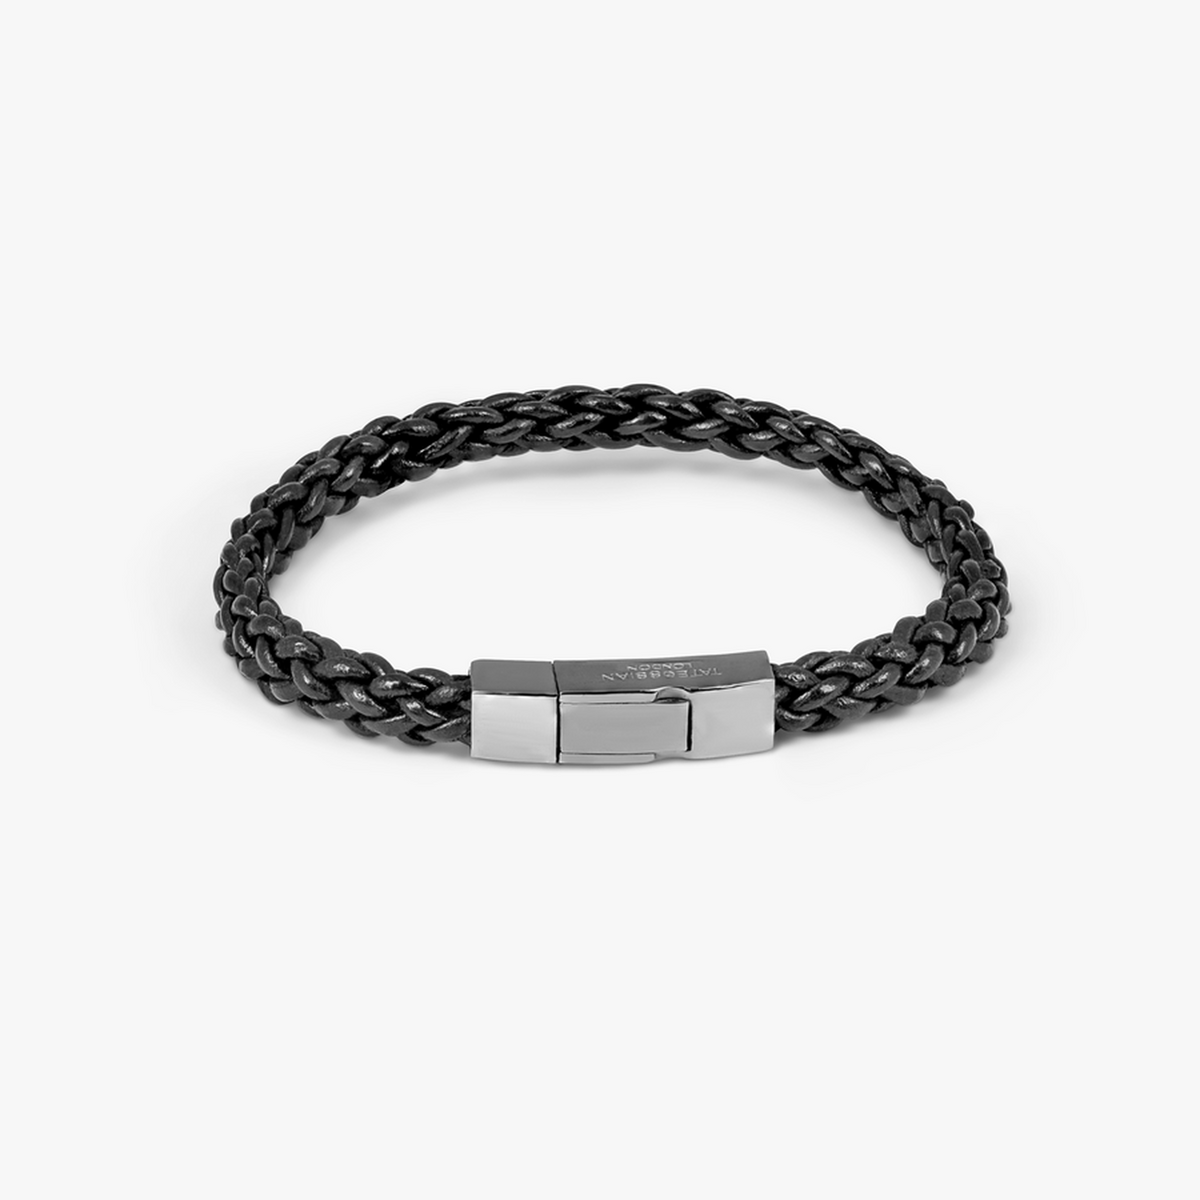 Click Trenza Bracelet in Italian Black Leather with Black Rhodium Plated Sterling Silver-Bracelets-Tateossian-Medium-Cufflinks.com.sg